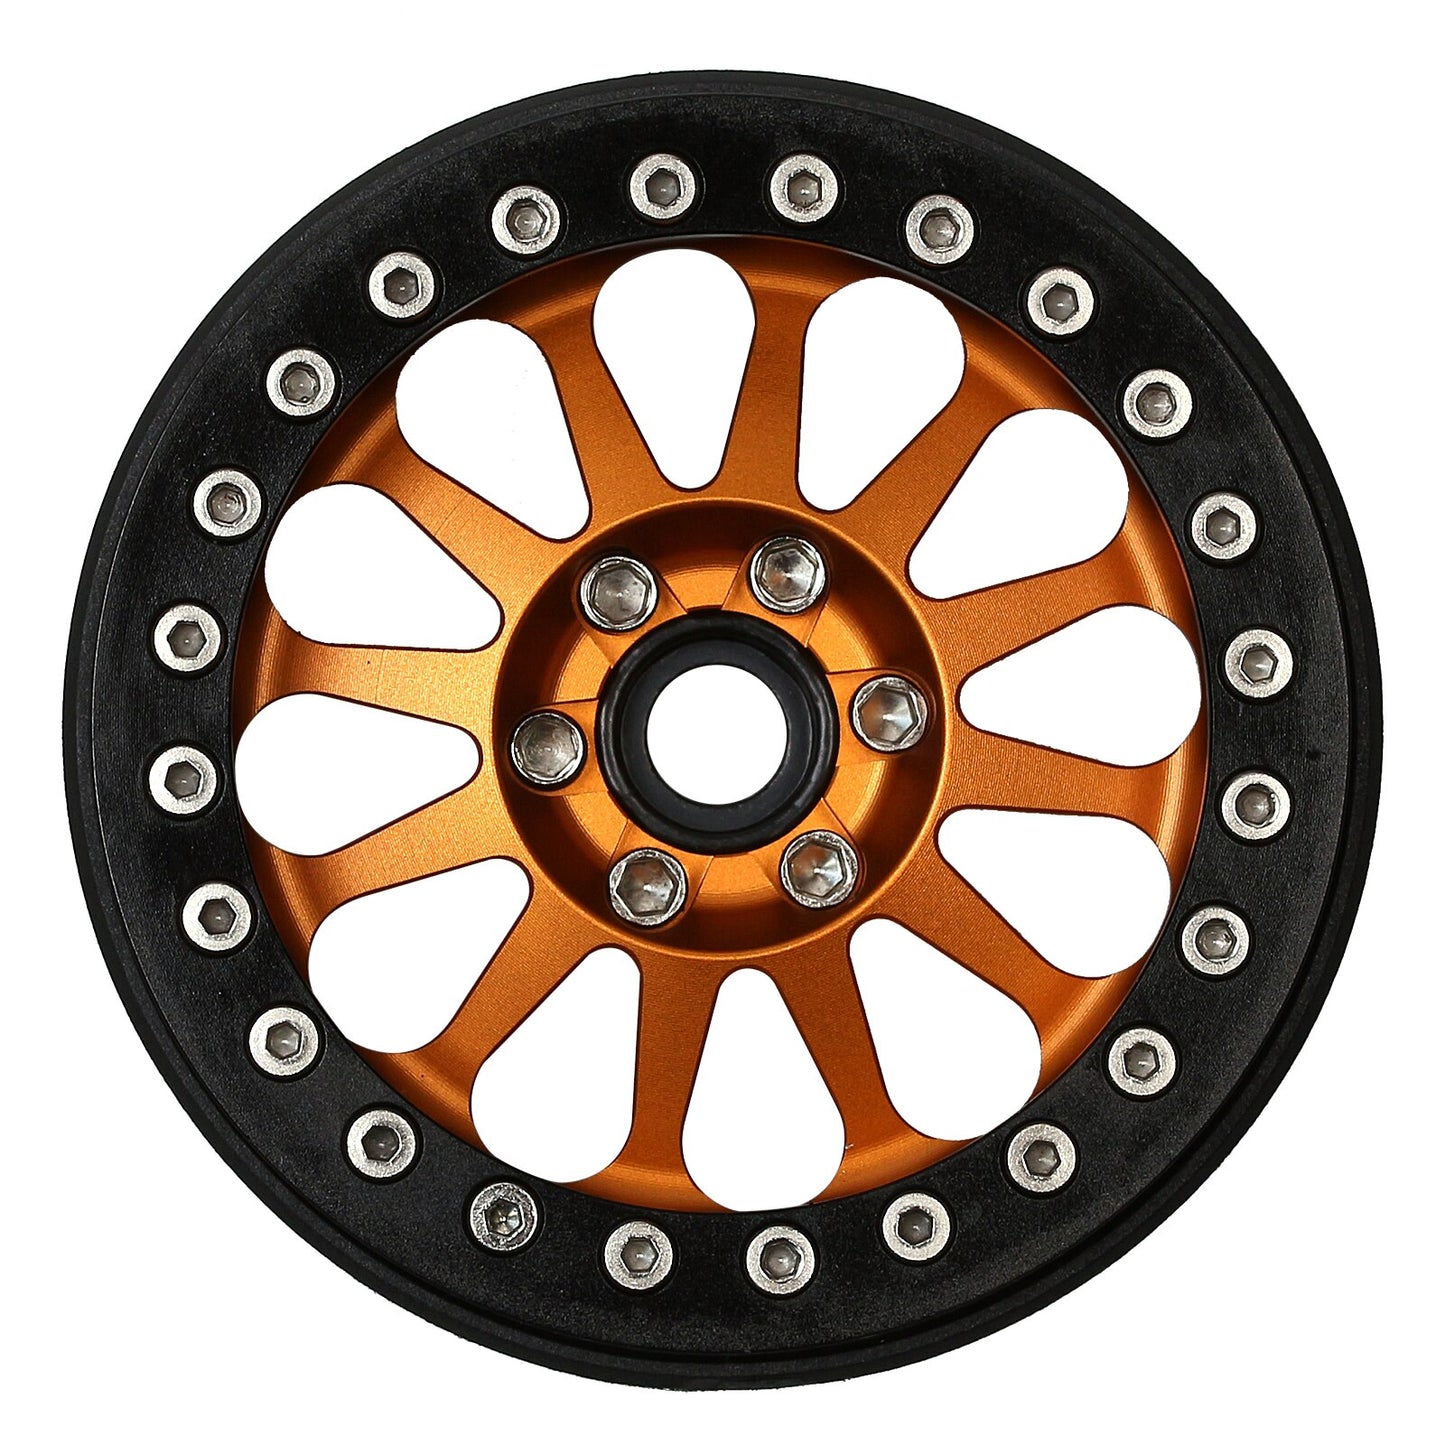 INJORA 4PCS 2.2" Metal Beadlock 12-Spokes Wheel Rim for RC Crawler Car TRX4 TRX6 Axial SCX10 90046 RR10 Wraith